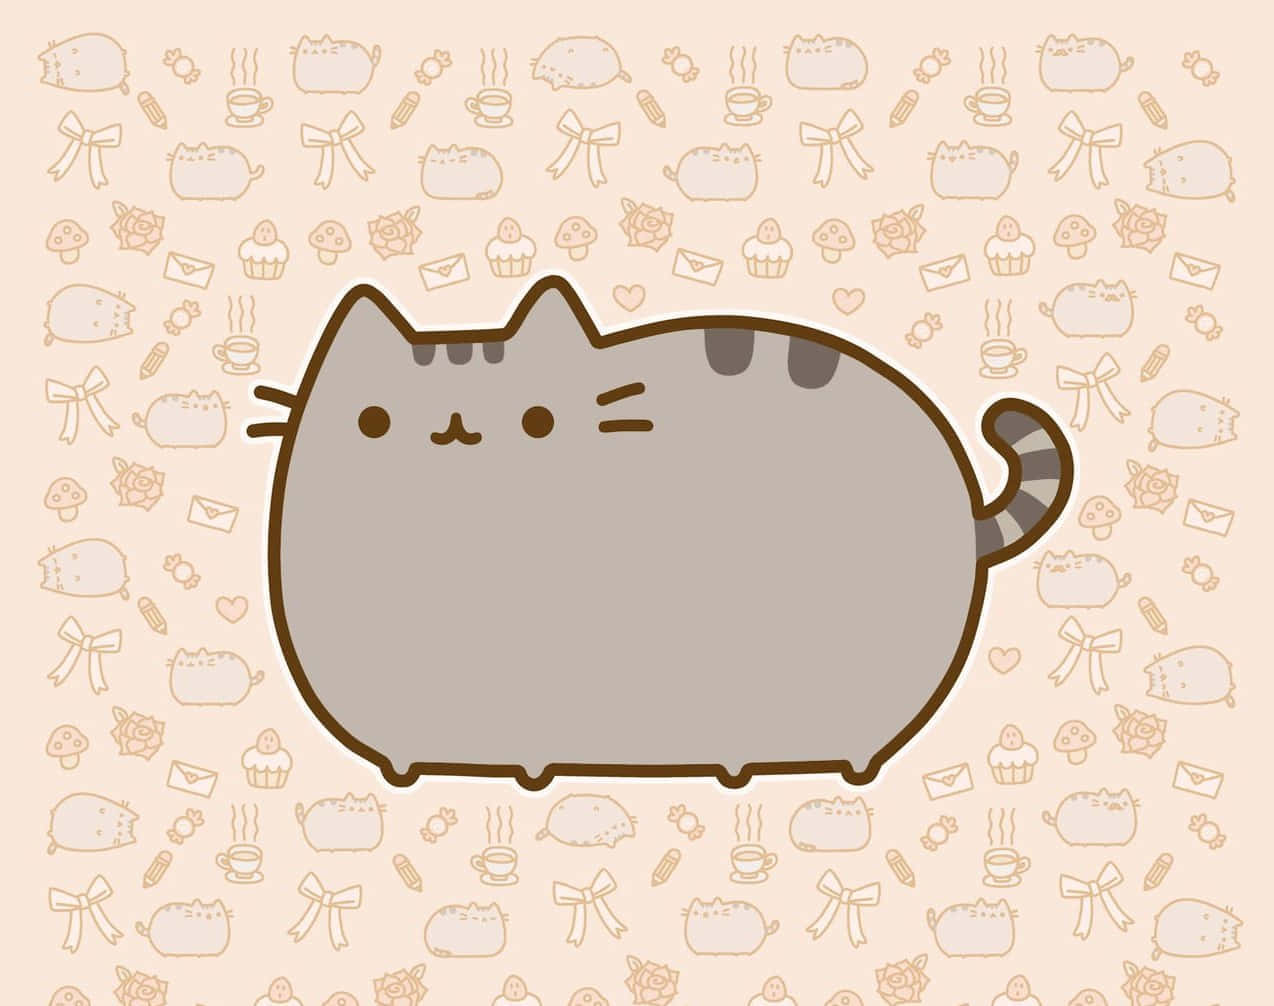 Adorable Pusheen Cat Enjoying a Sweet Treat Wallpaper